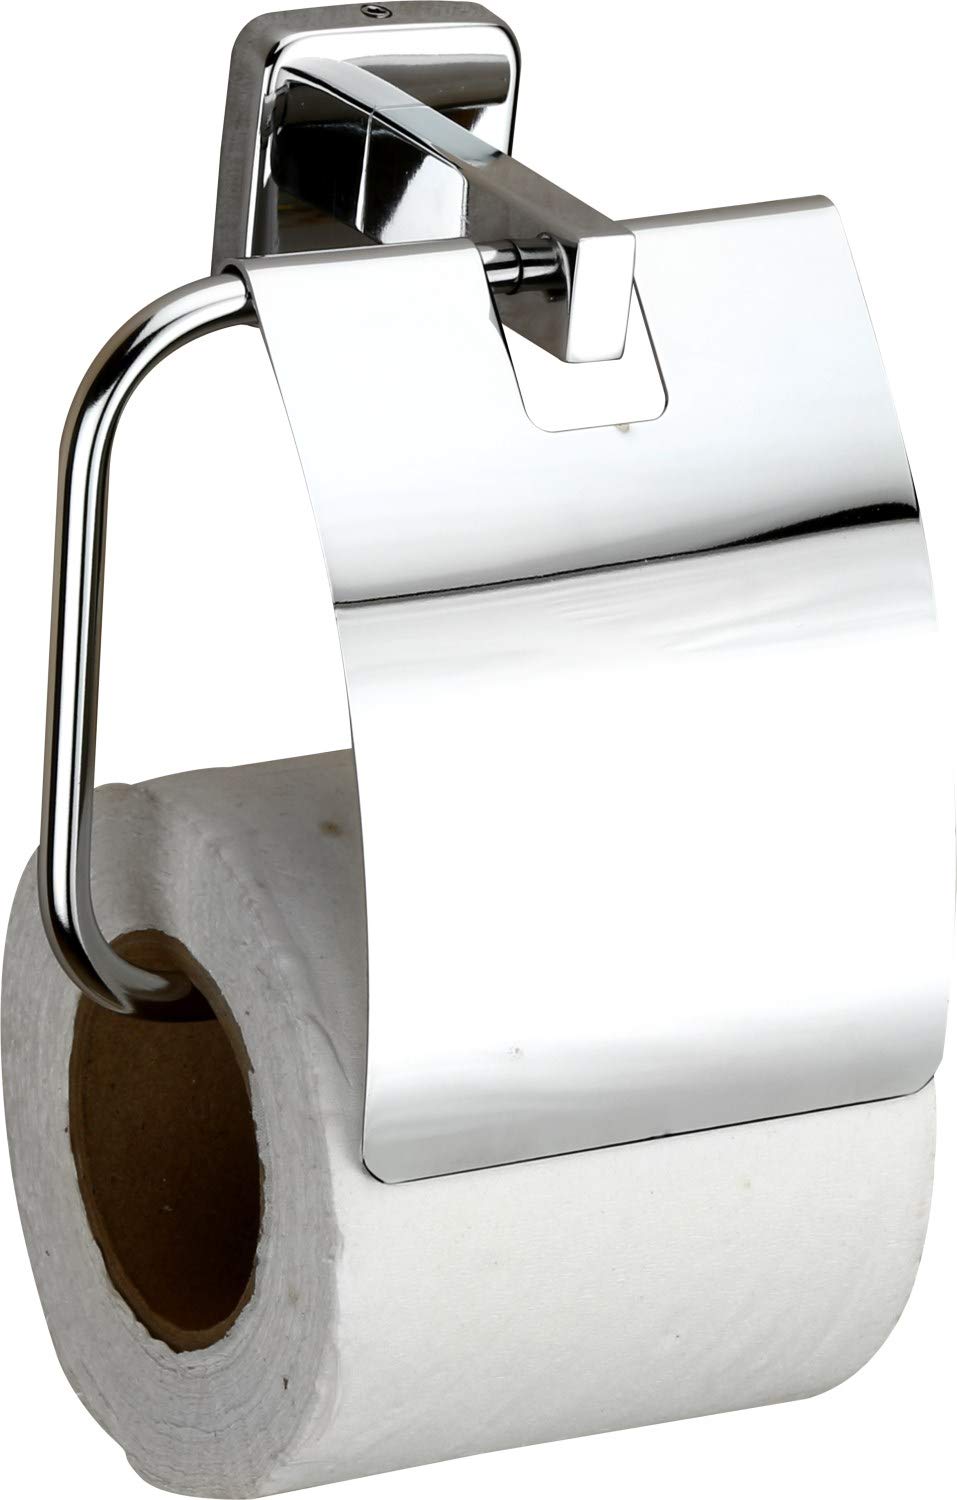 Plantex Nexa Stainless Steel Toilet Paper Roll Holder/Toilet Paper Holder in Bathroom/Kitchen/Bathroom Accessories (Chrome) - Pack of 1